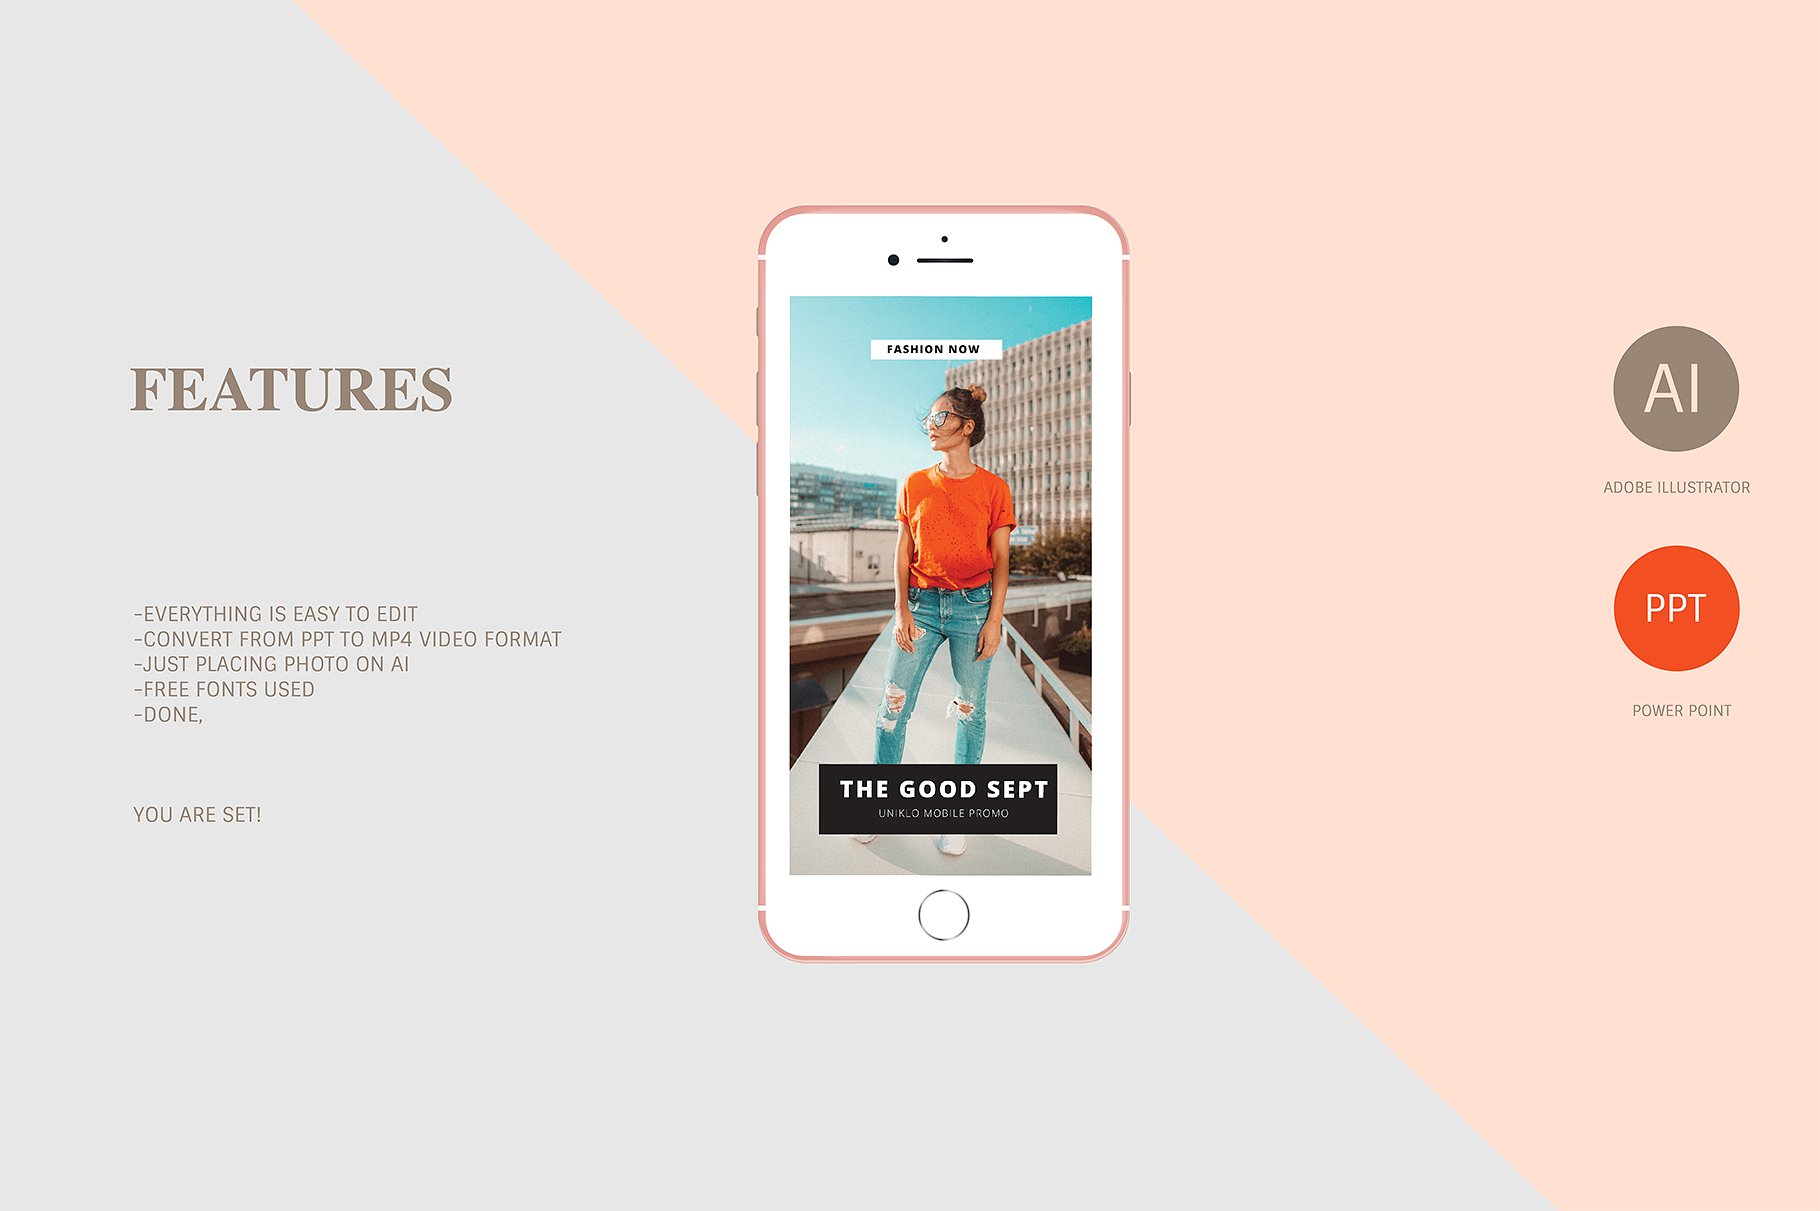 25个女性服装推广促销Instagram故事模板 25 Women’s Clothing Promotion Promotion Instagram Story Template插图4